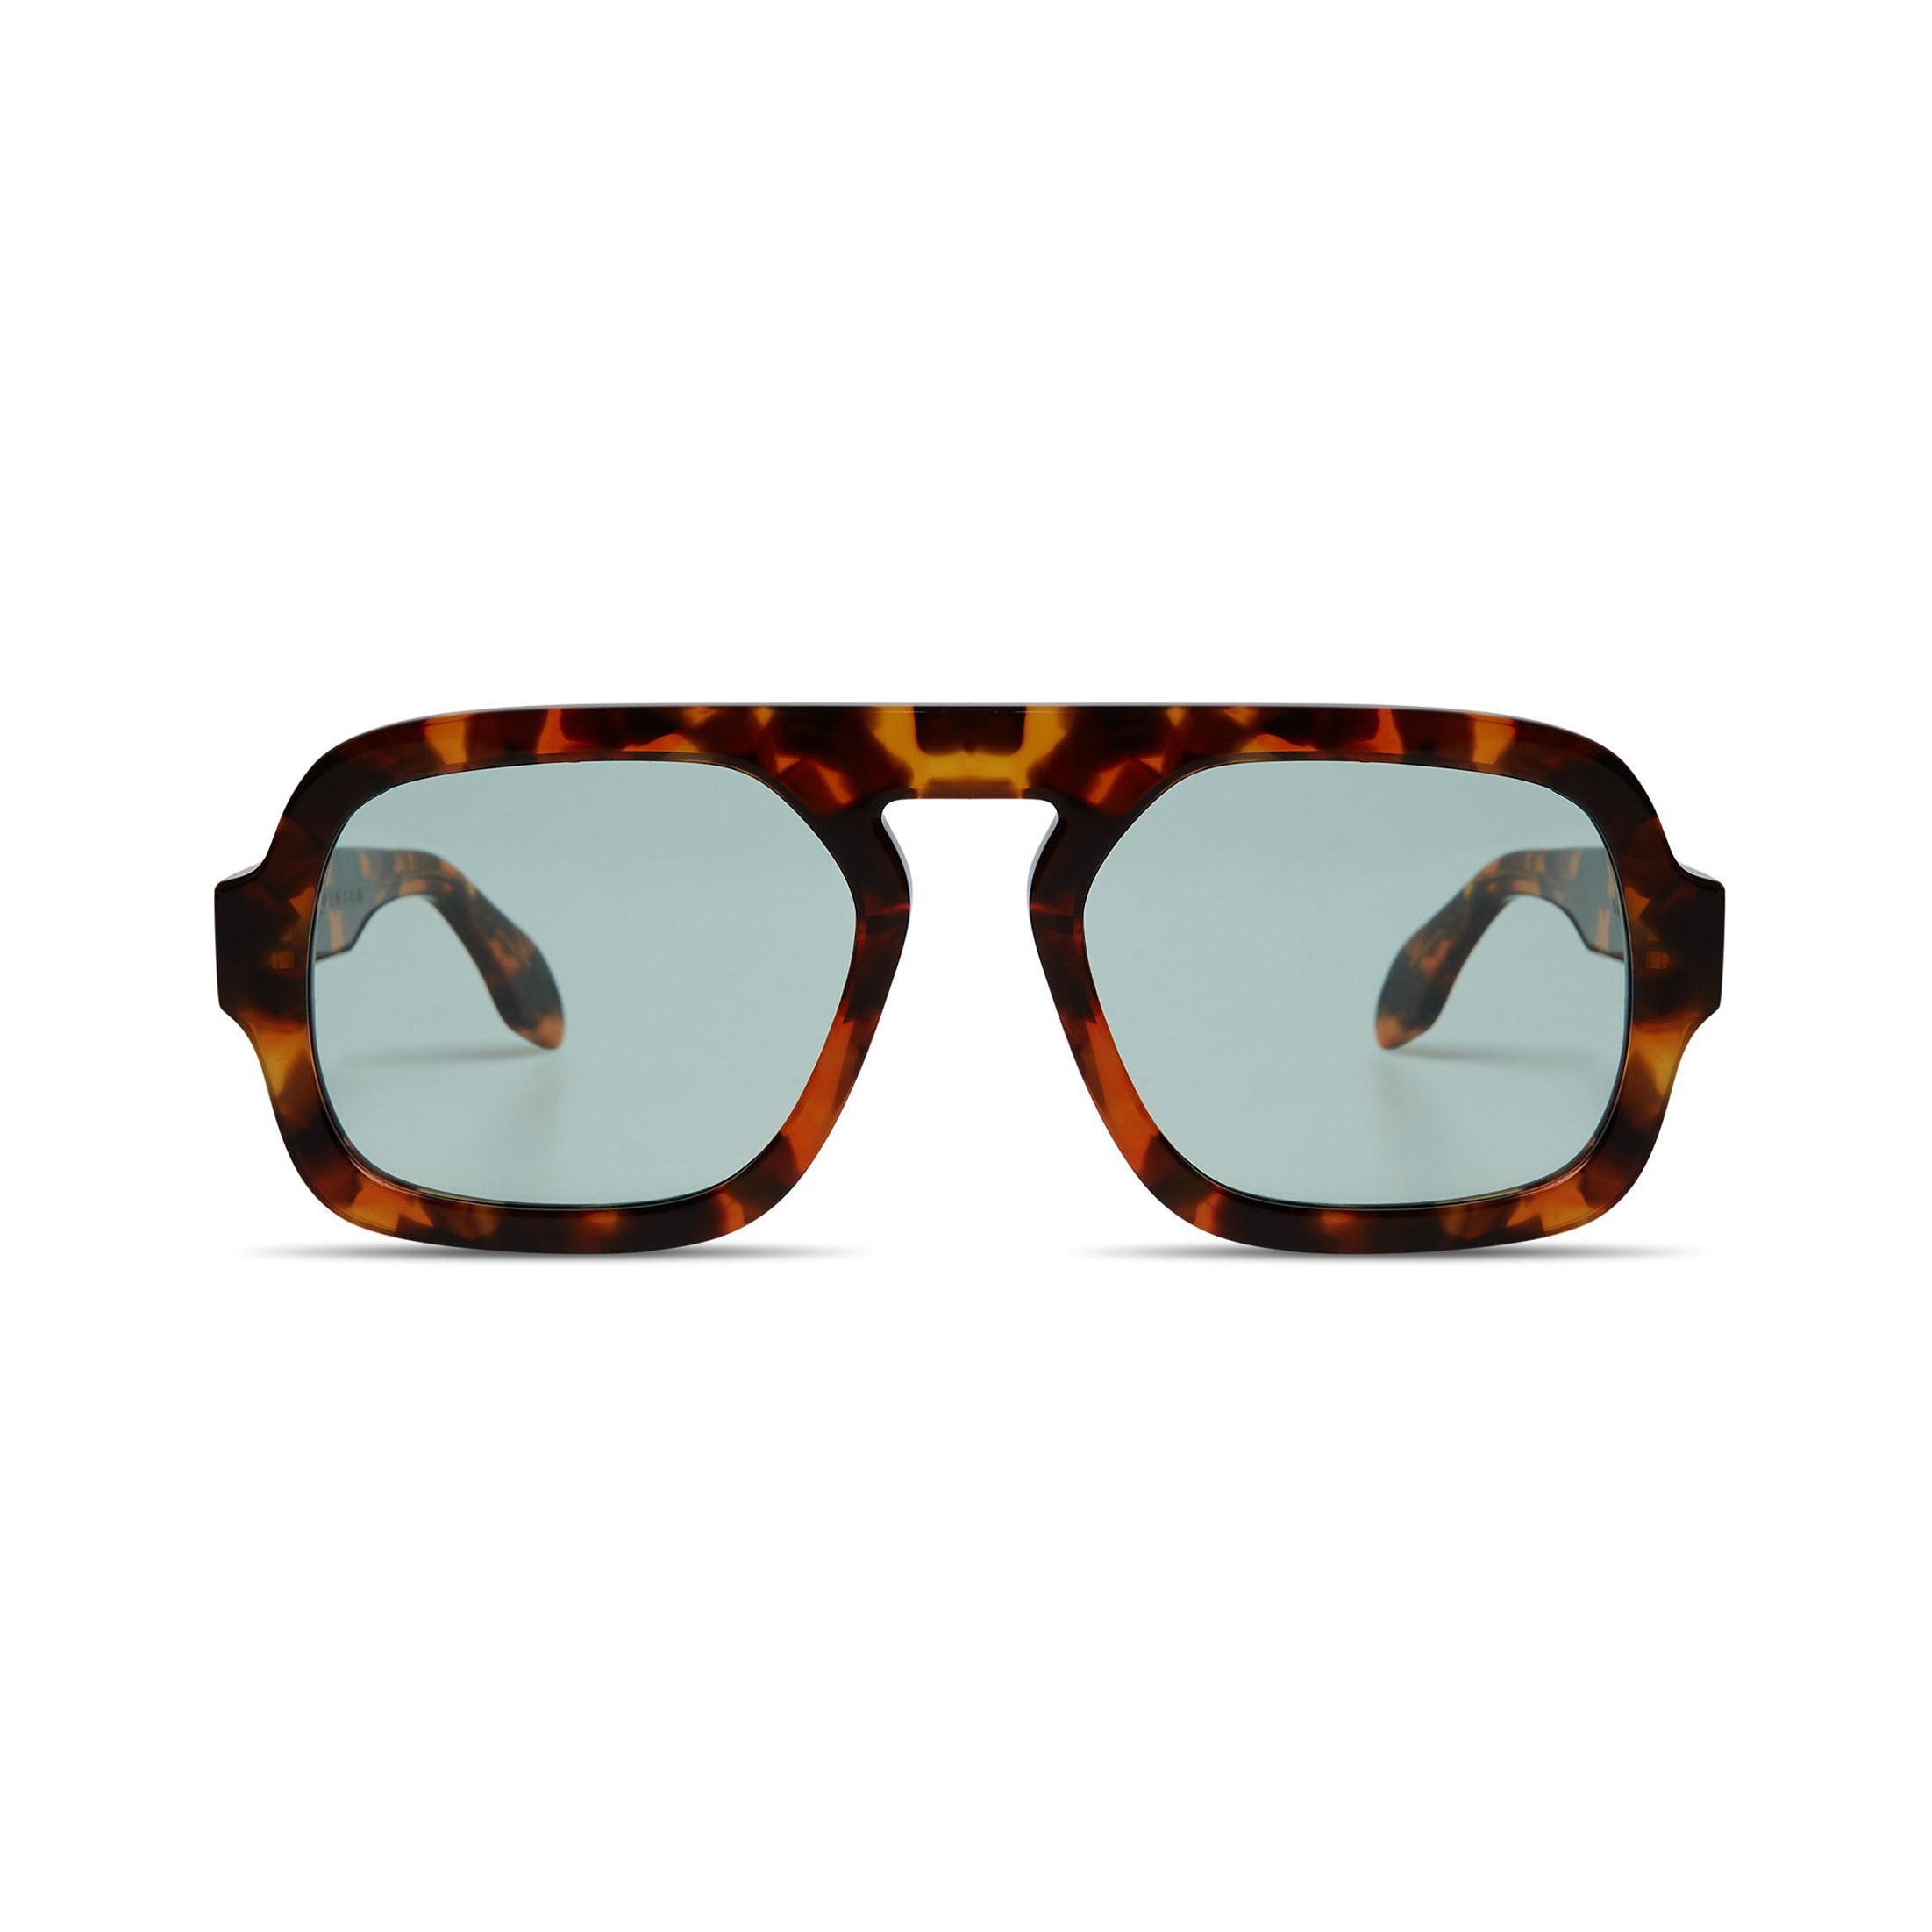 Vistana Vistana (Med-Small) Sunglasses in Tortoise